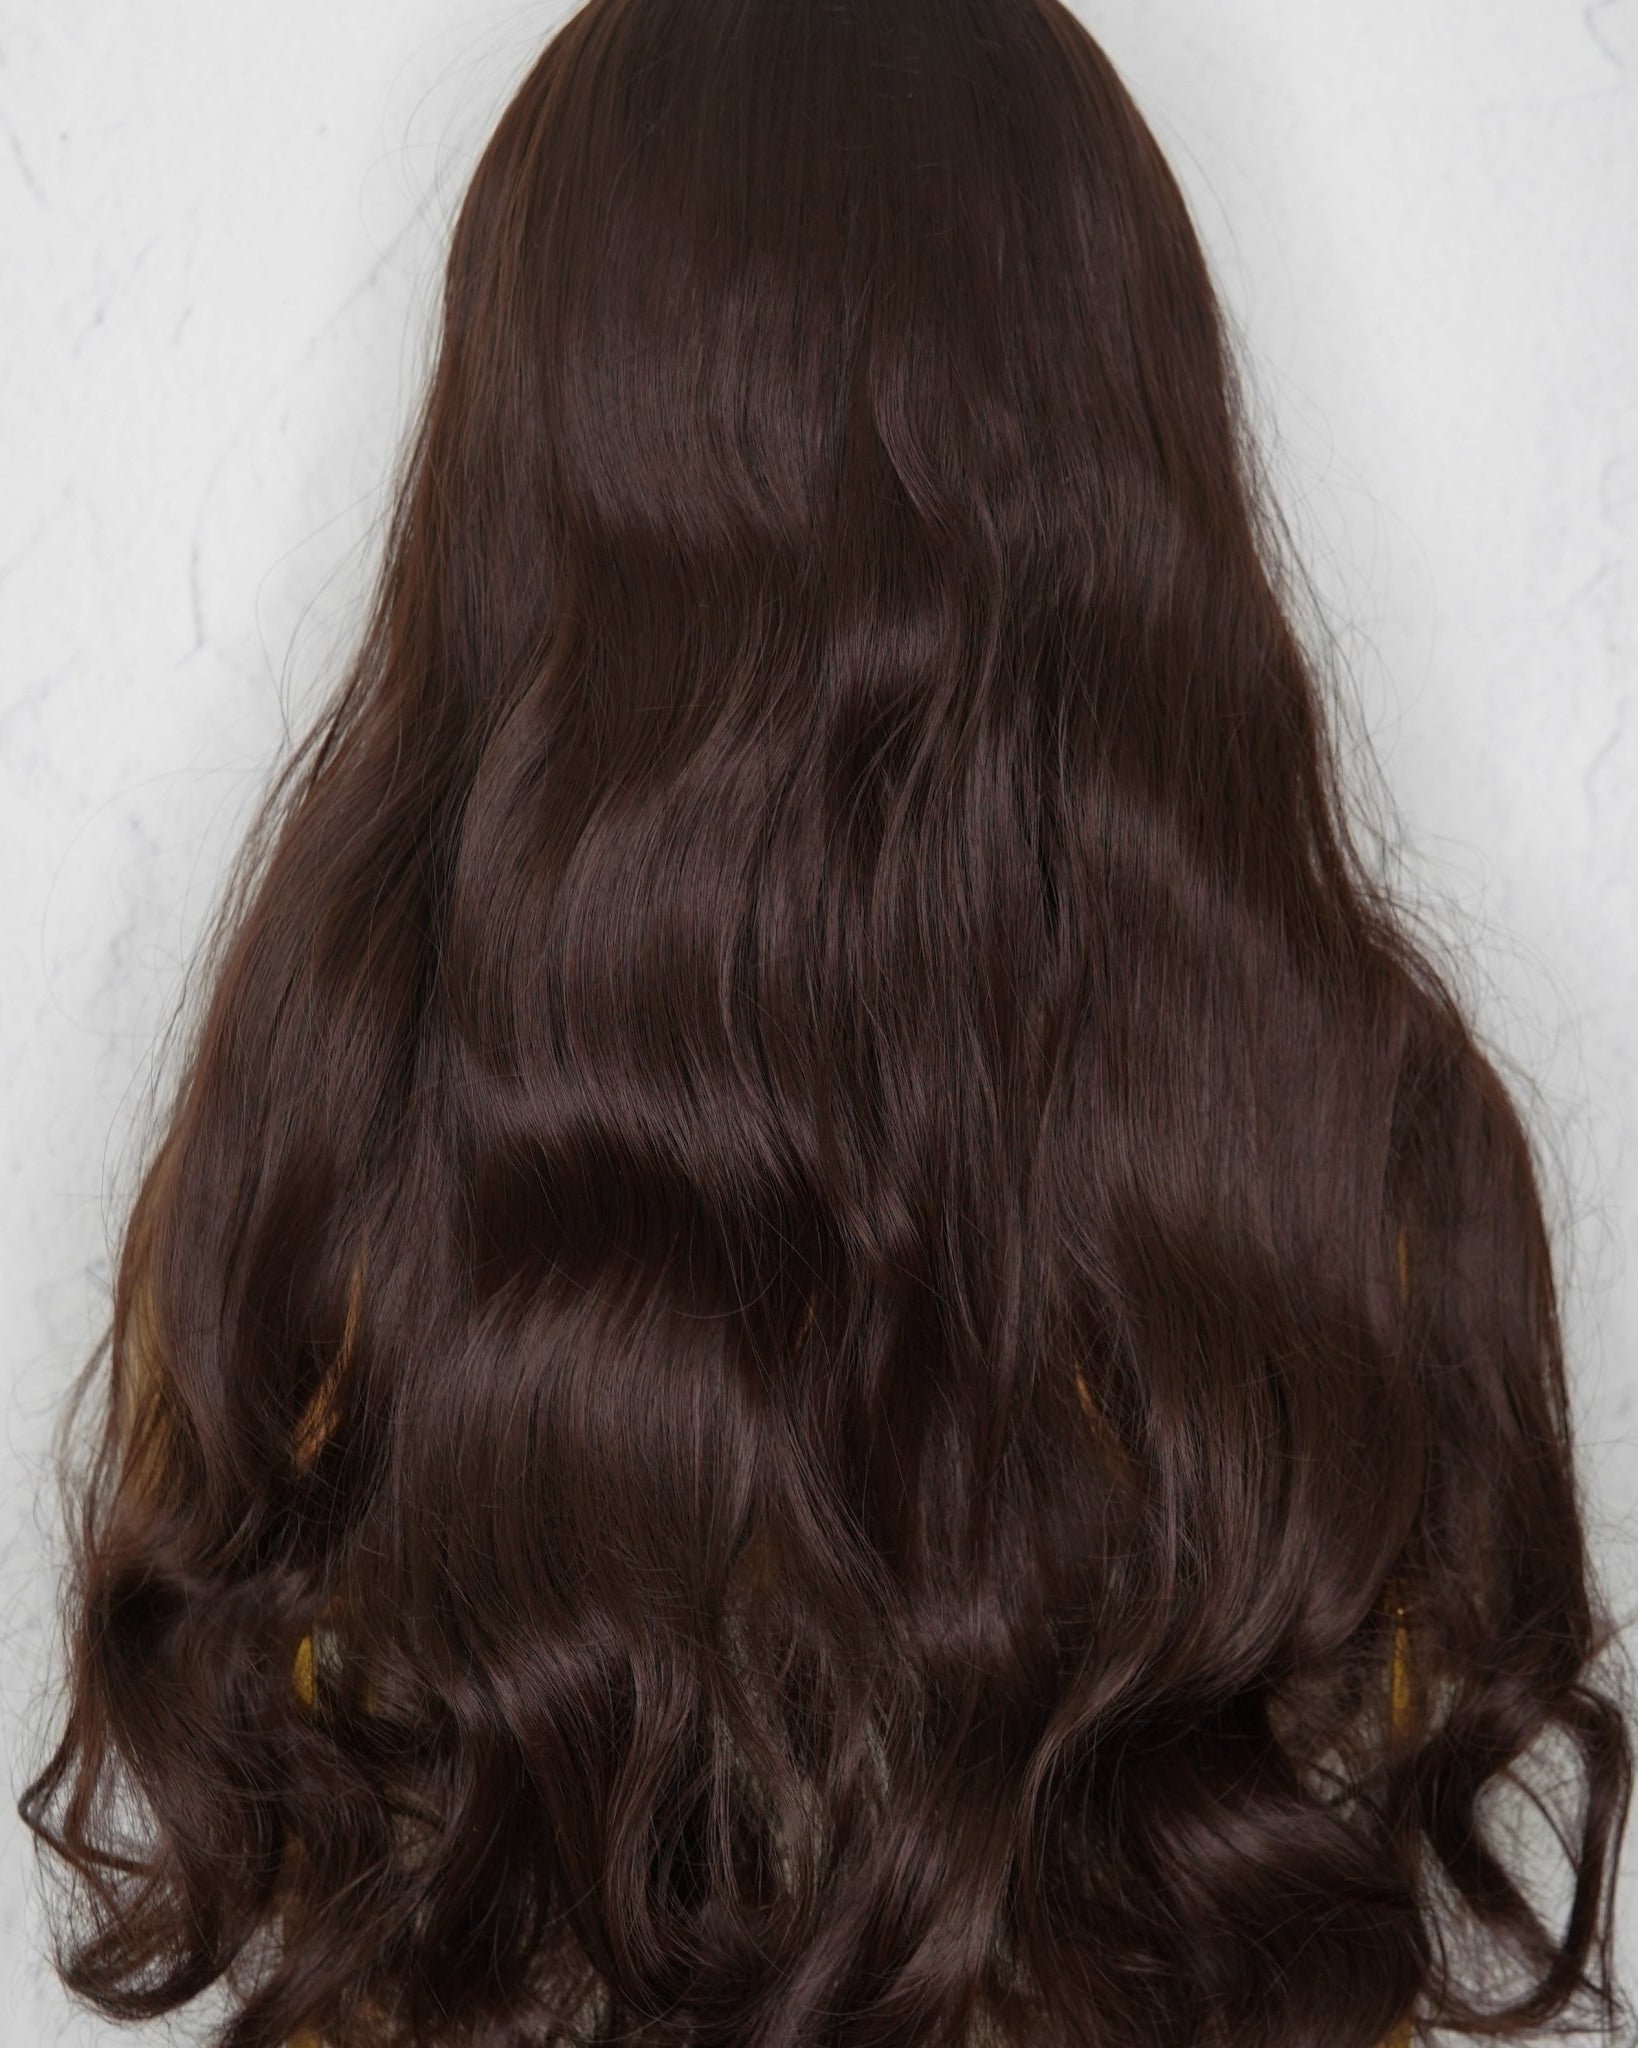 PAULA Dark Brown Lace Front Wig ** SAMPLE - Milk & Honey